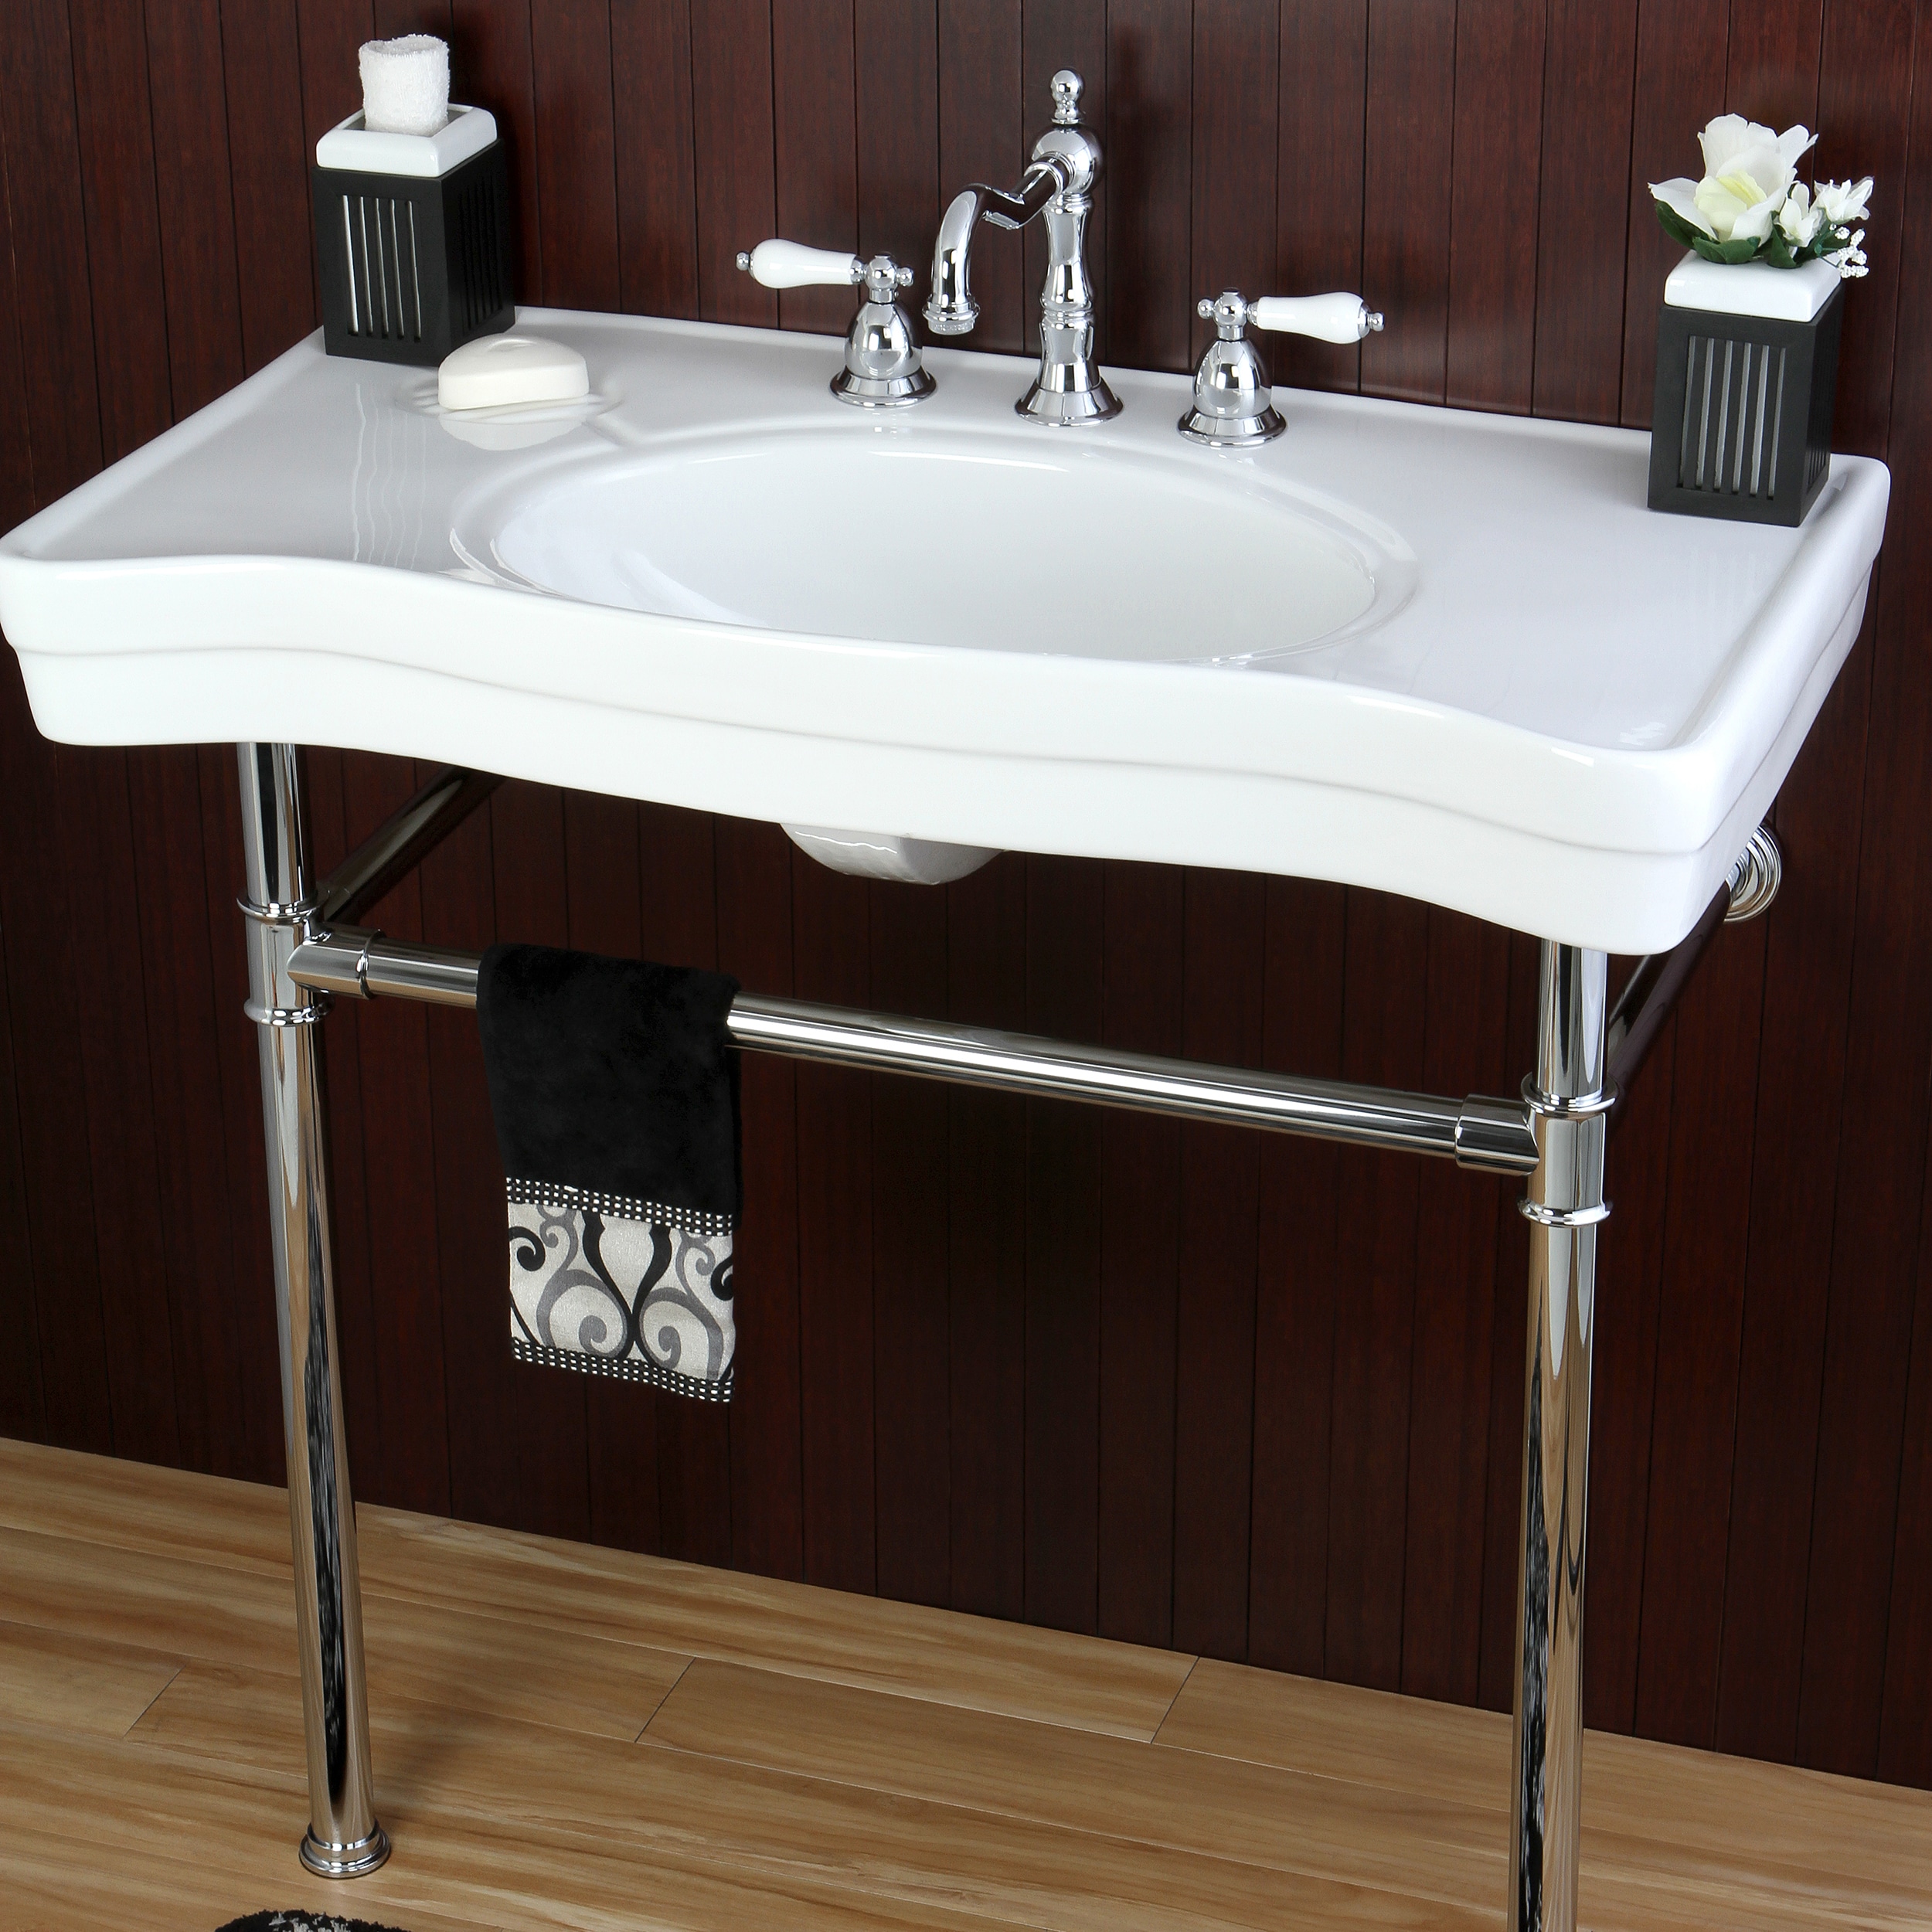 Imperial Vintage 36 Inch Wall Mount Chrome Pedestal Bathroom Sink Vanity Overstock 6573333